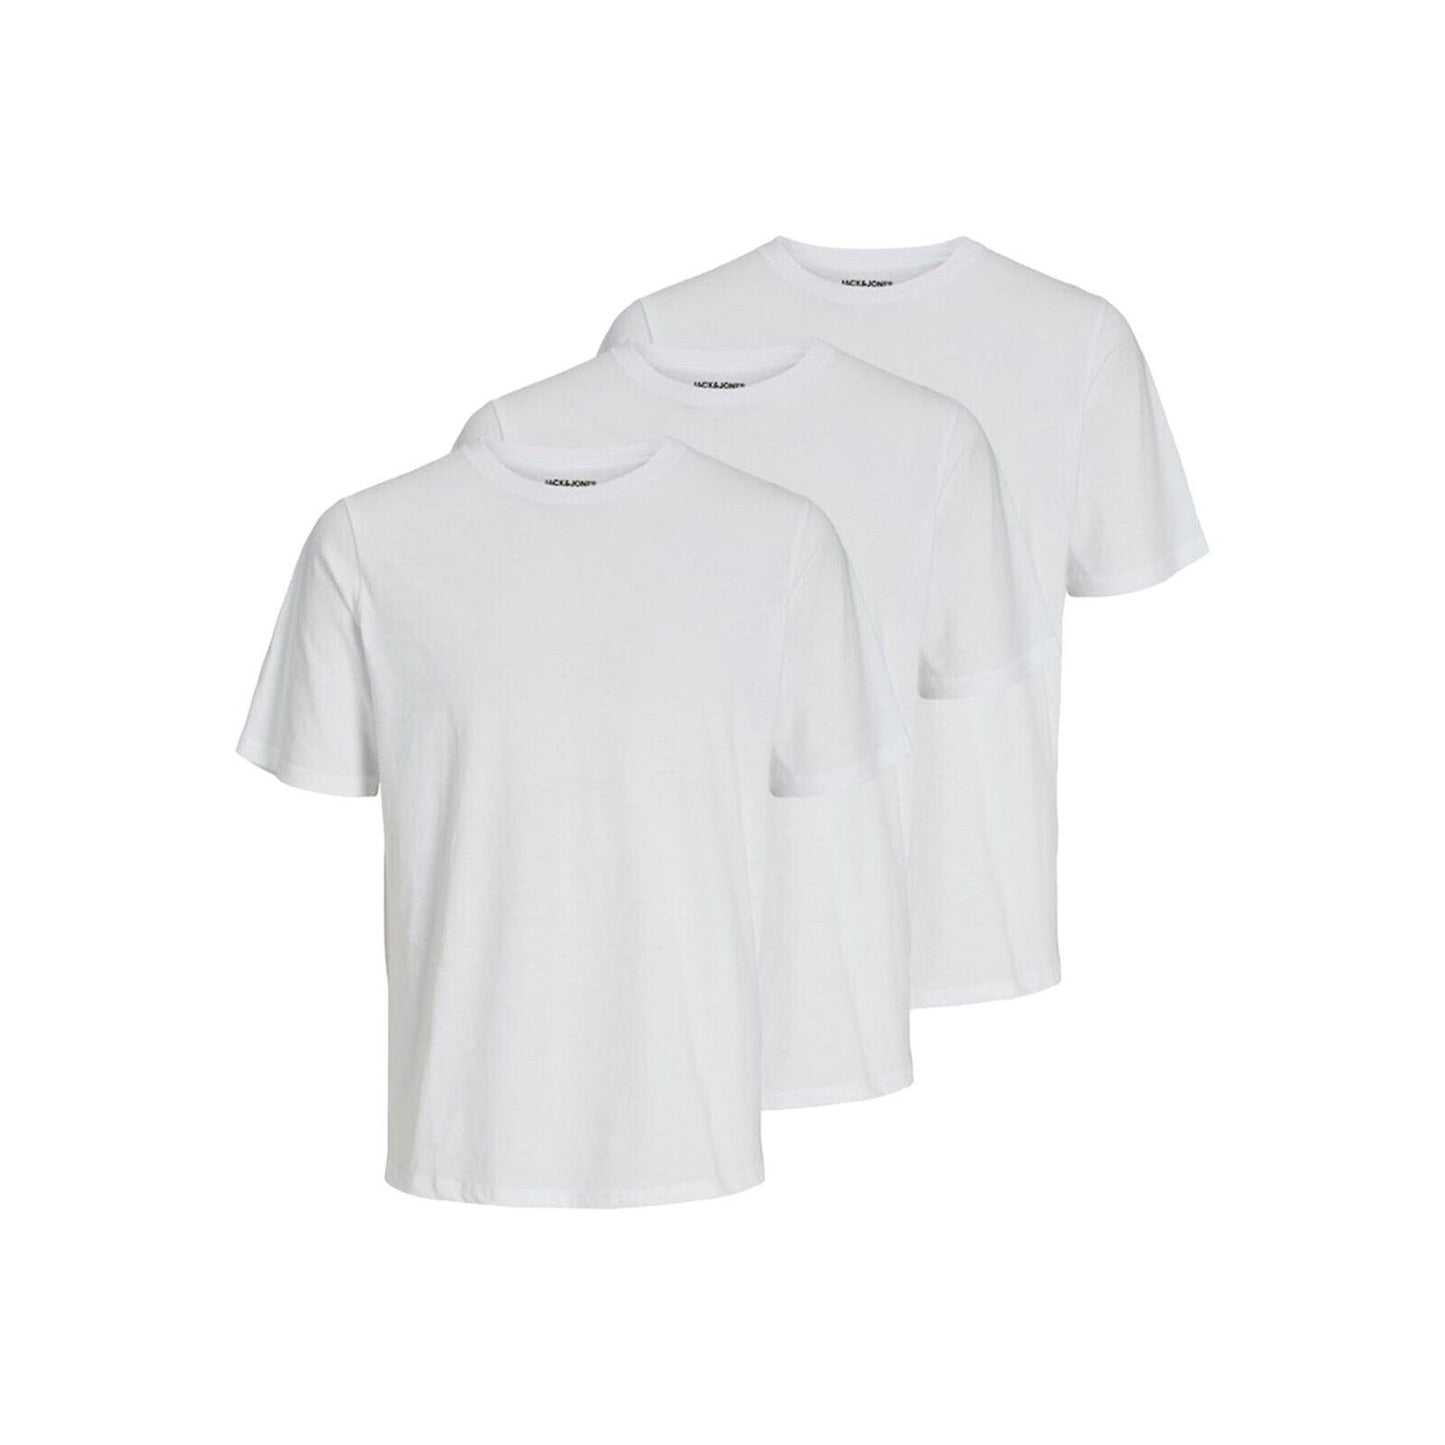 Mens T-Shirt Jack & Jones 3 Pack Plain Logo Branded Cotton Tee Top Casual S-2XL